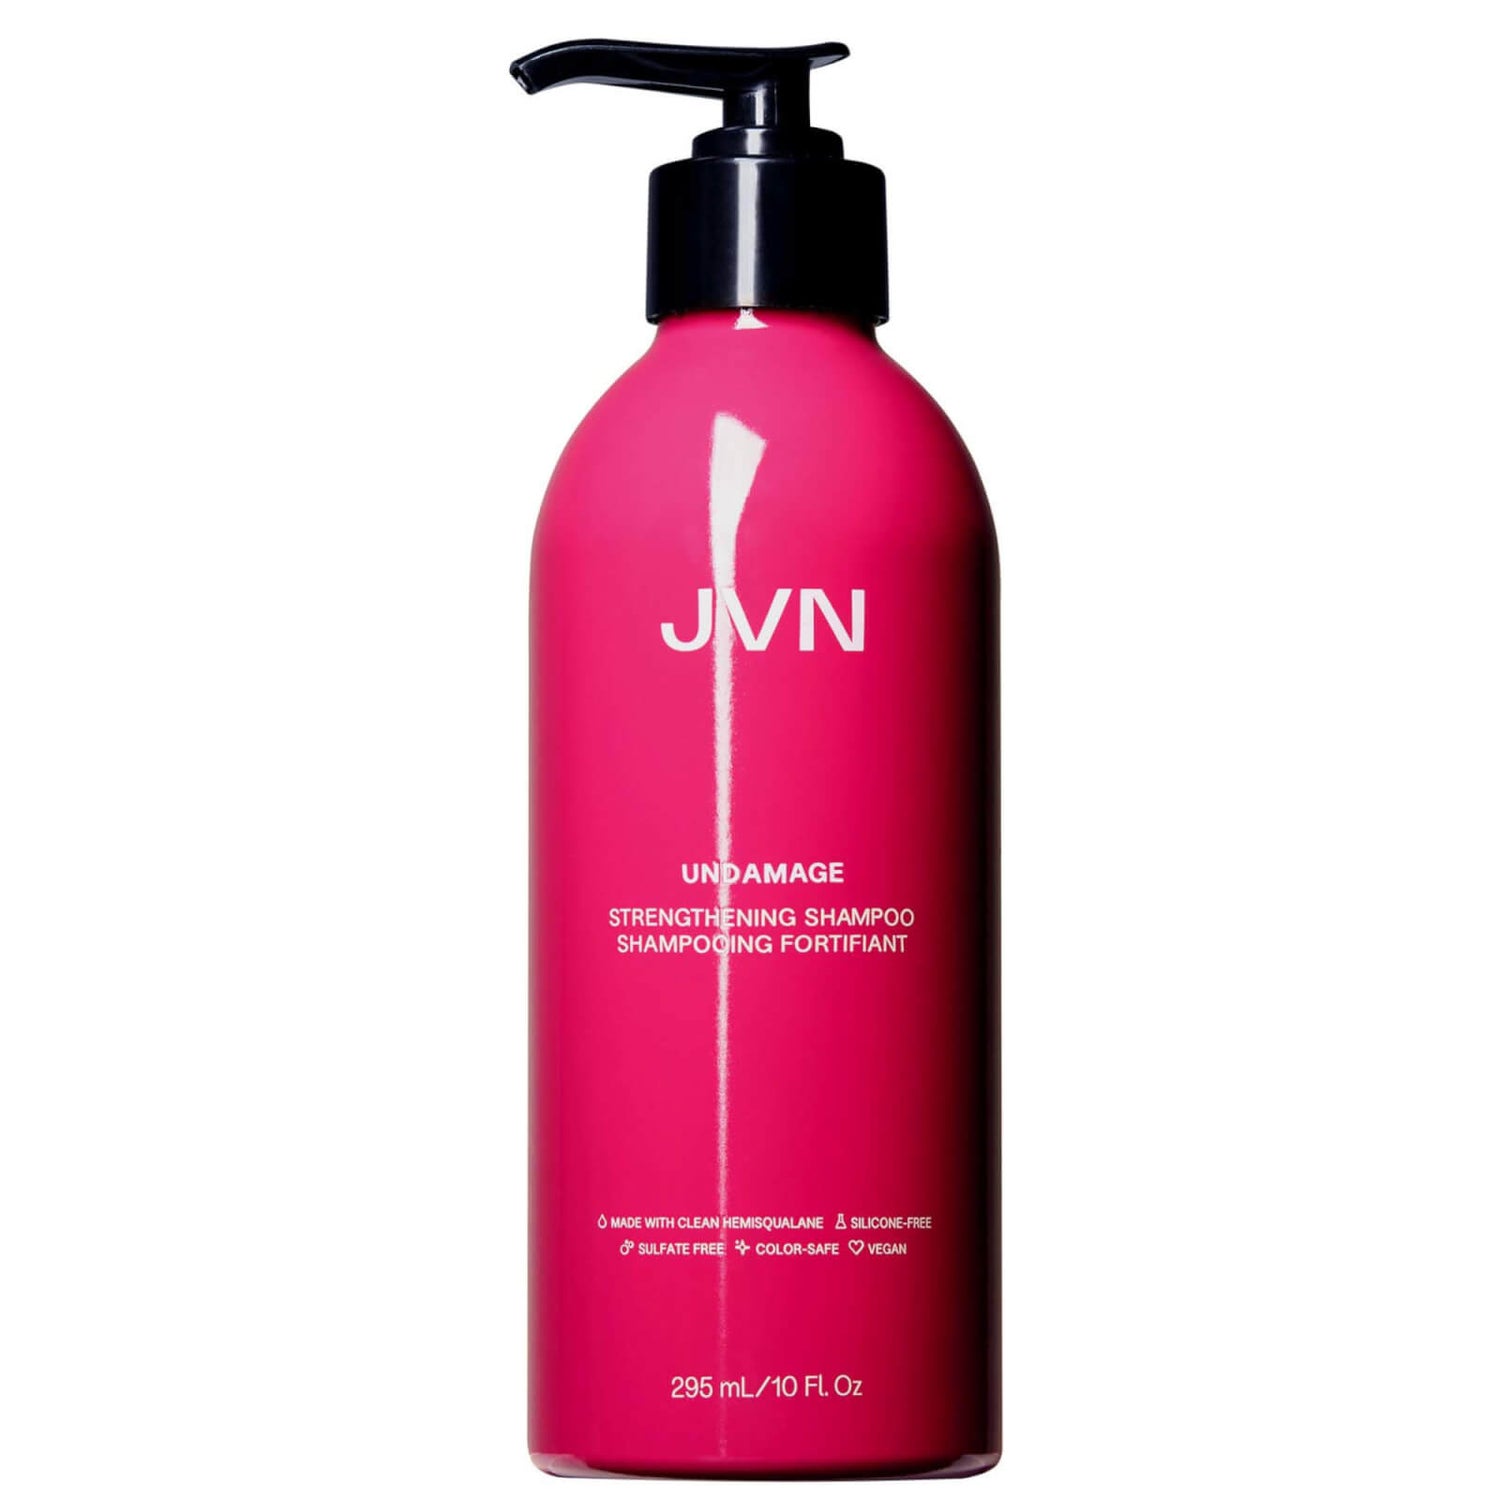 JVN Undamage Strengthening Shampoo 295ml